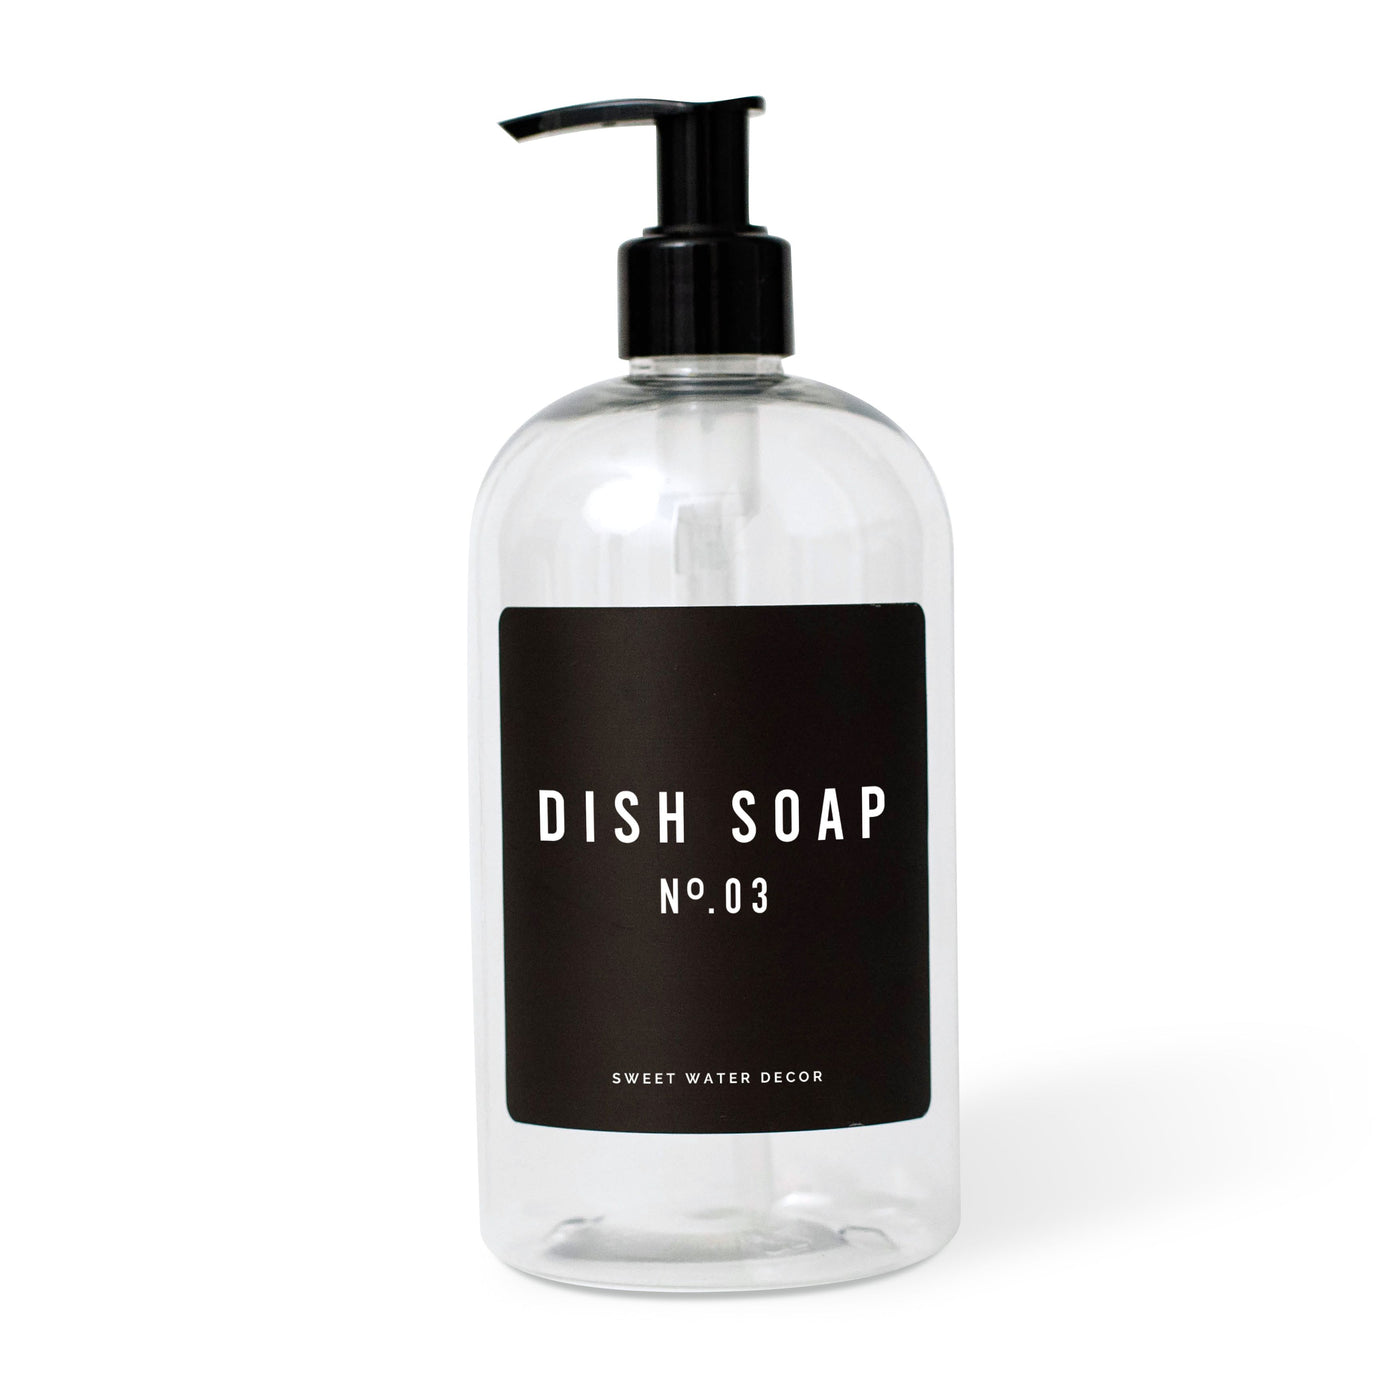 16oz Clear Plastic Dish Soap Dispenser - Black Label